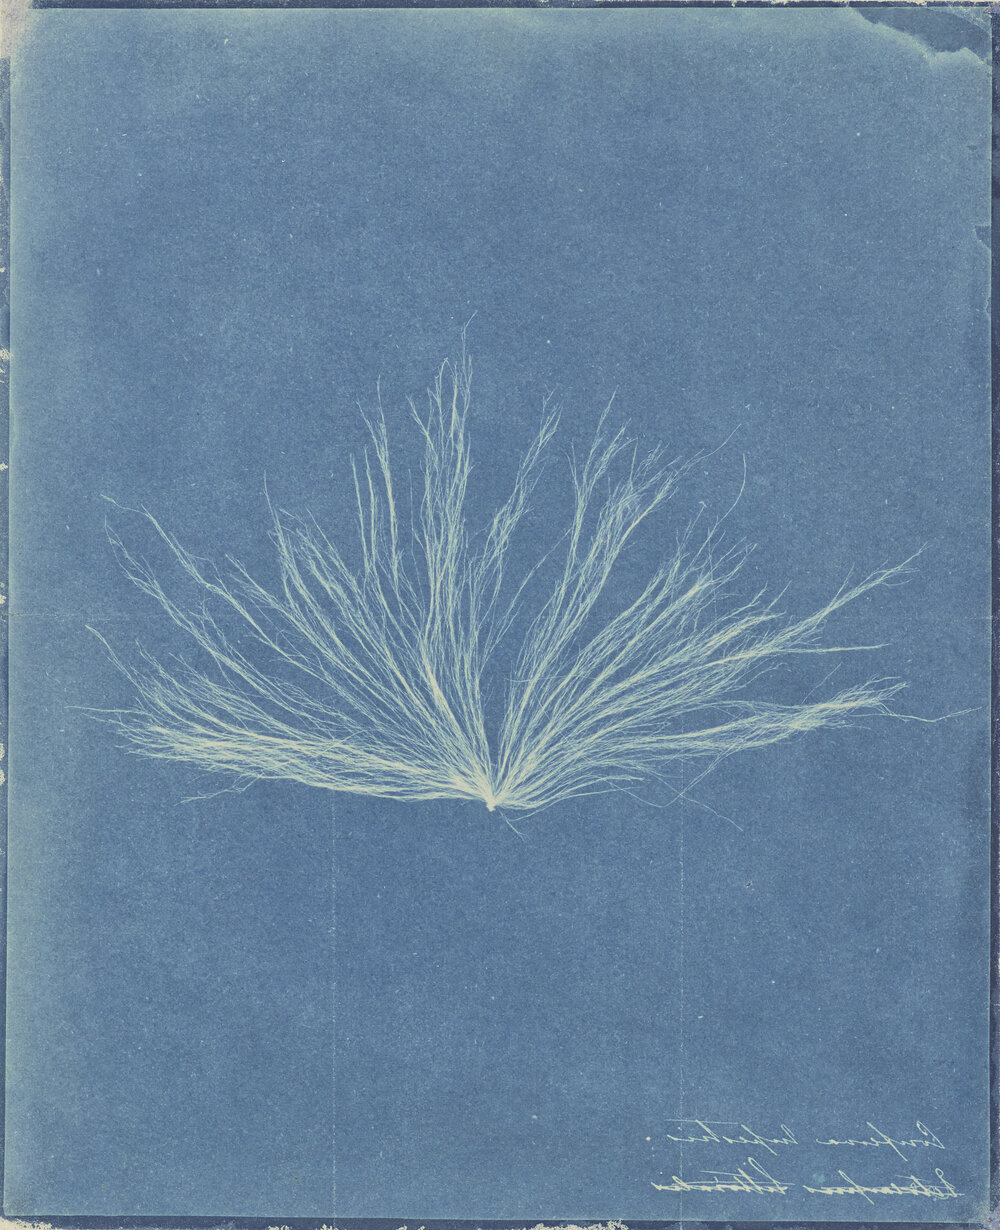 Anna Atkins, Confervae, 1843–1845, cyanotype.